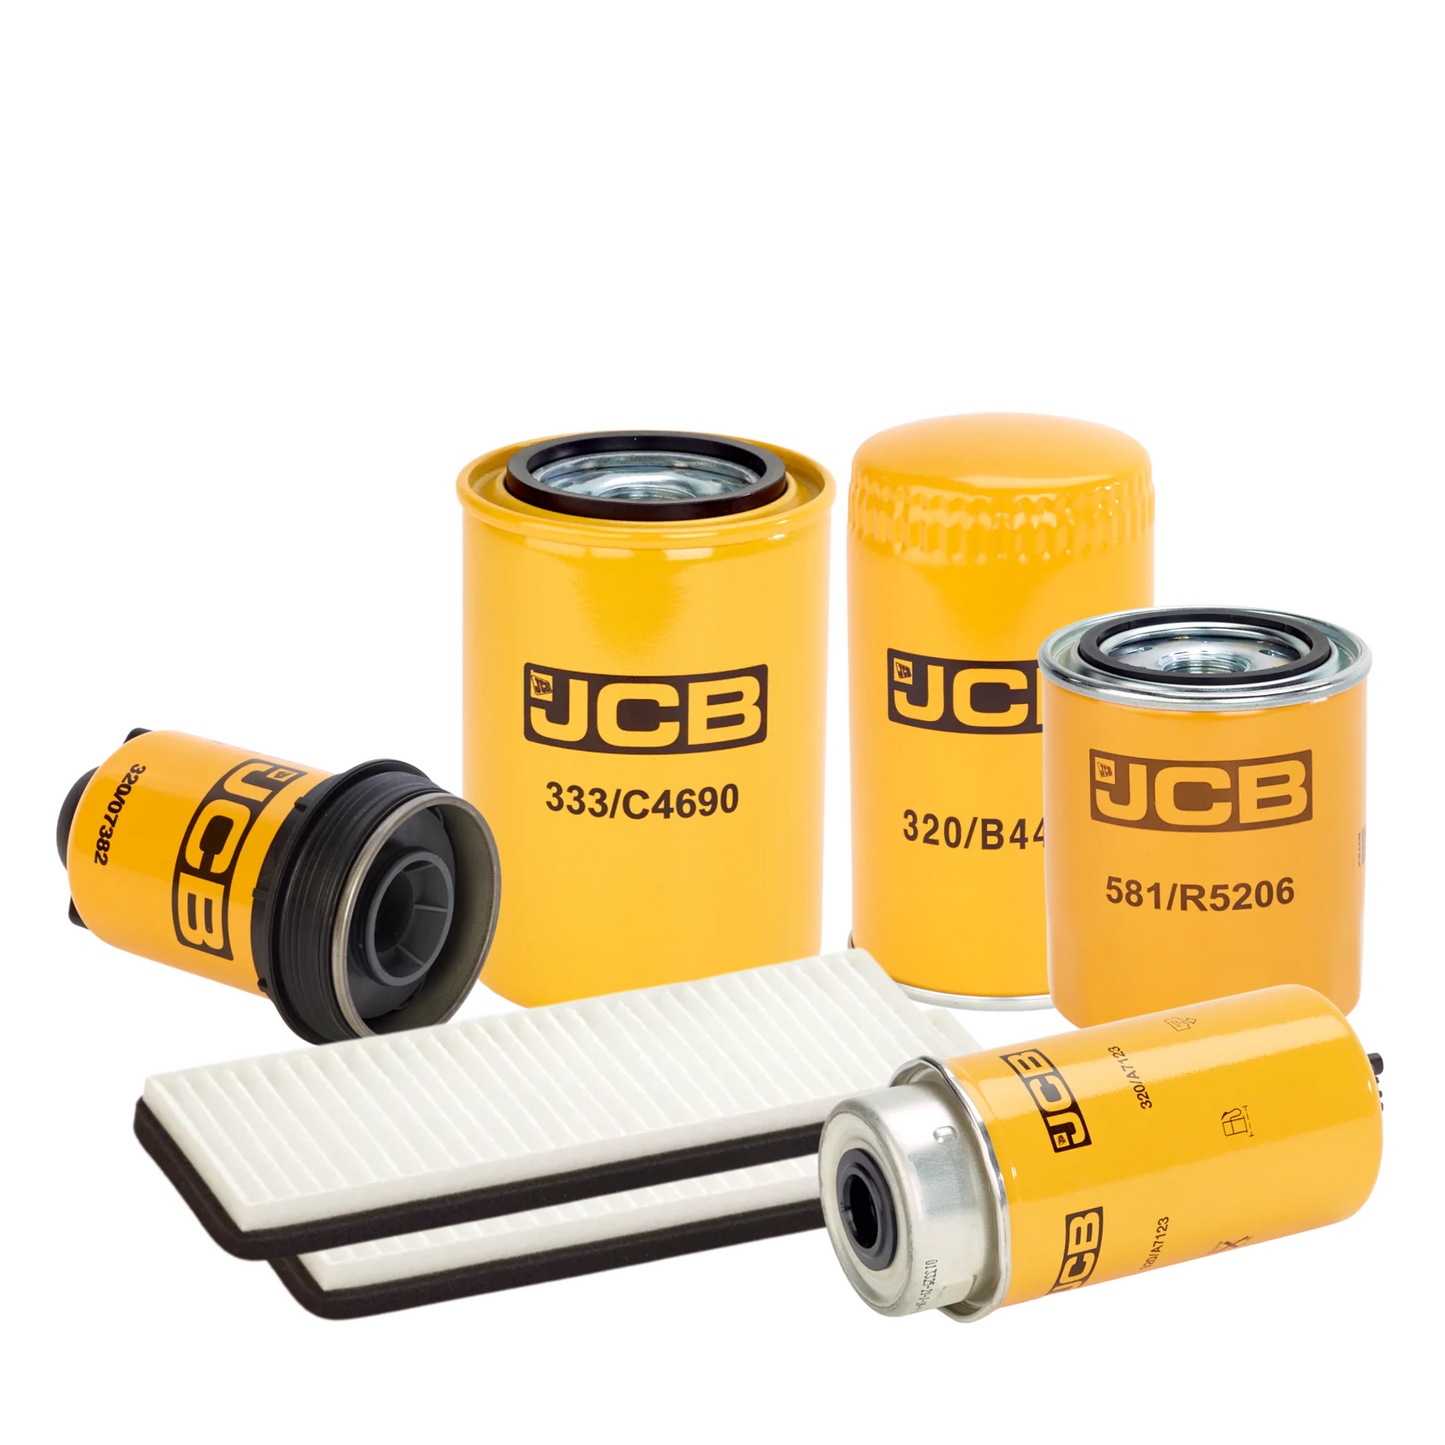 JCB 535-95 5500 Hour Filter Service Kit